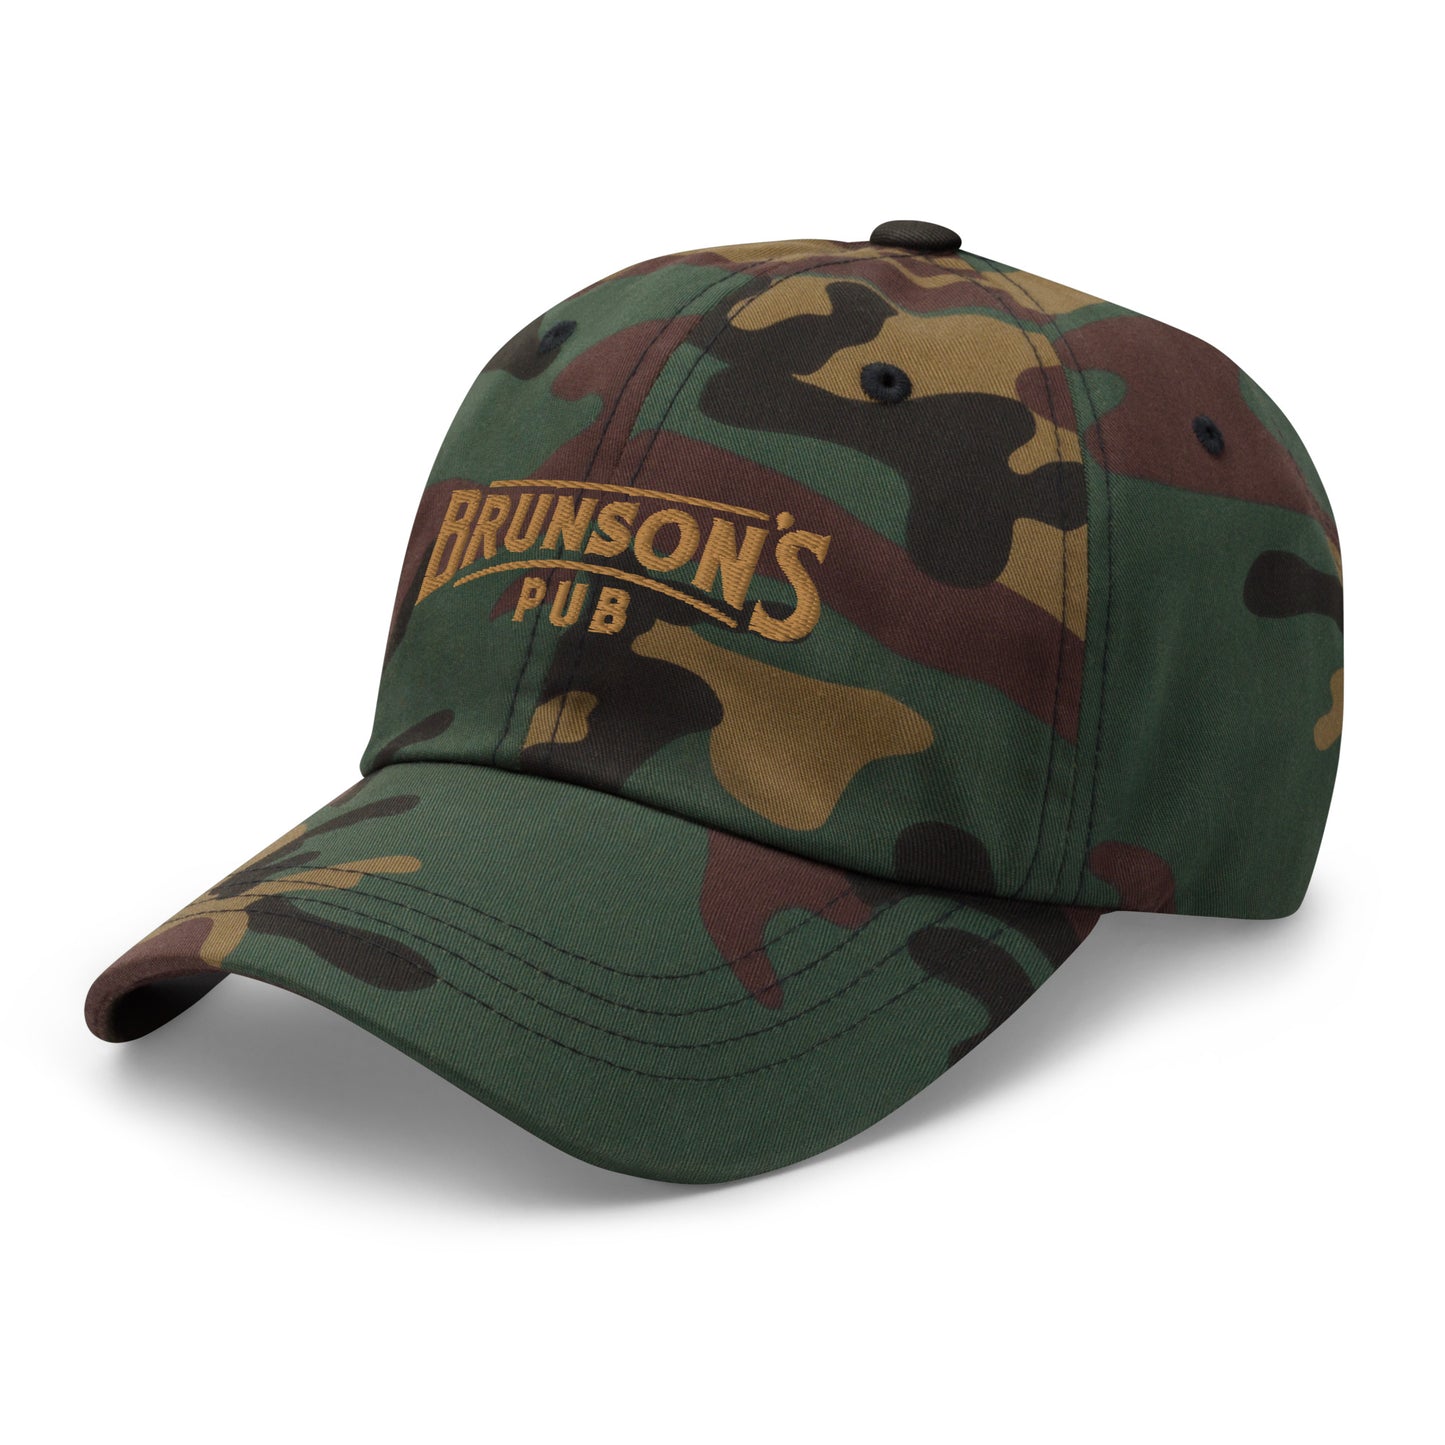 Brunson’s Pub  - adjustable strap hat